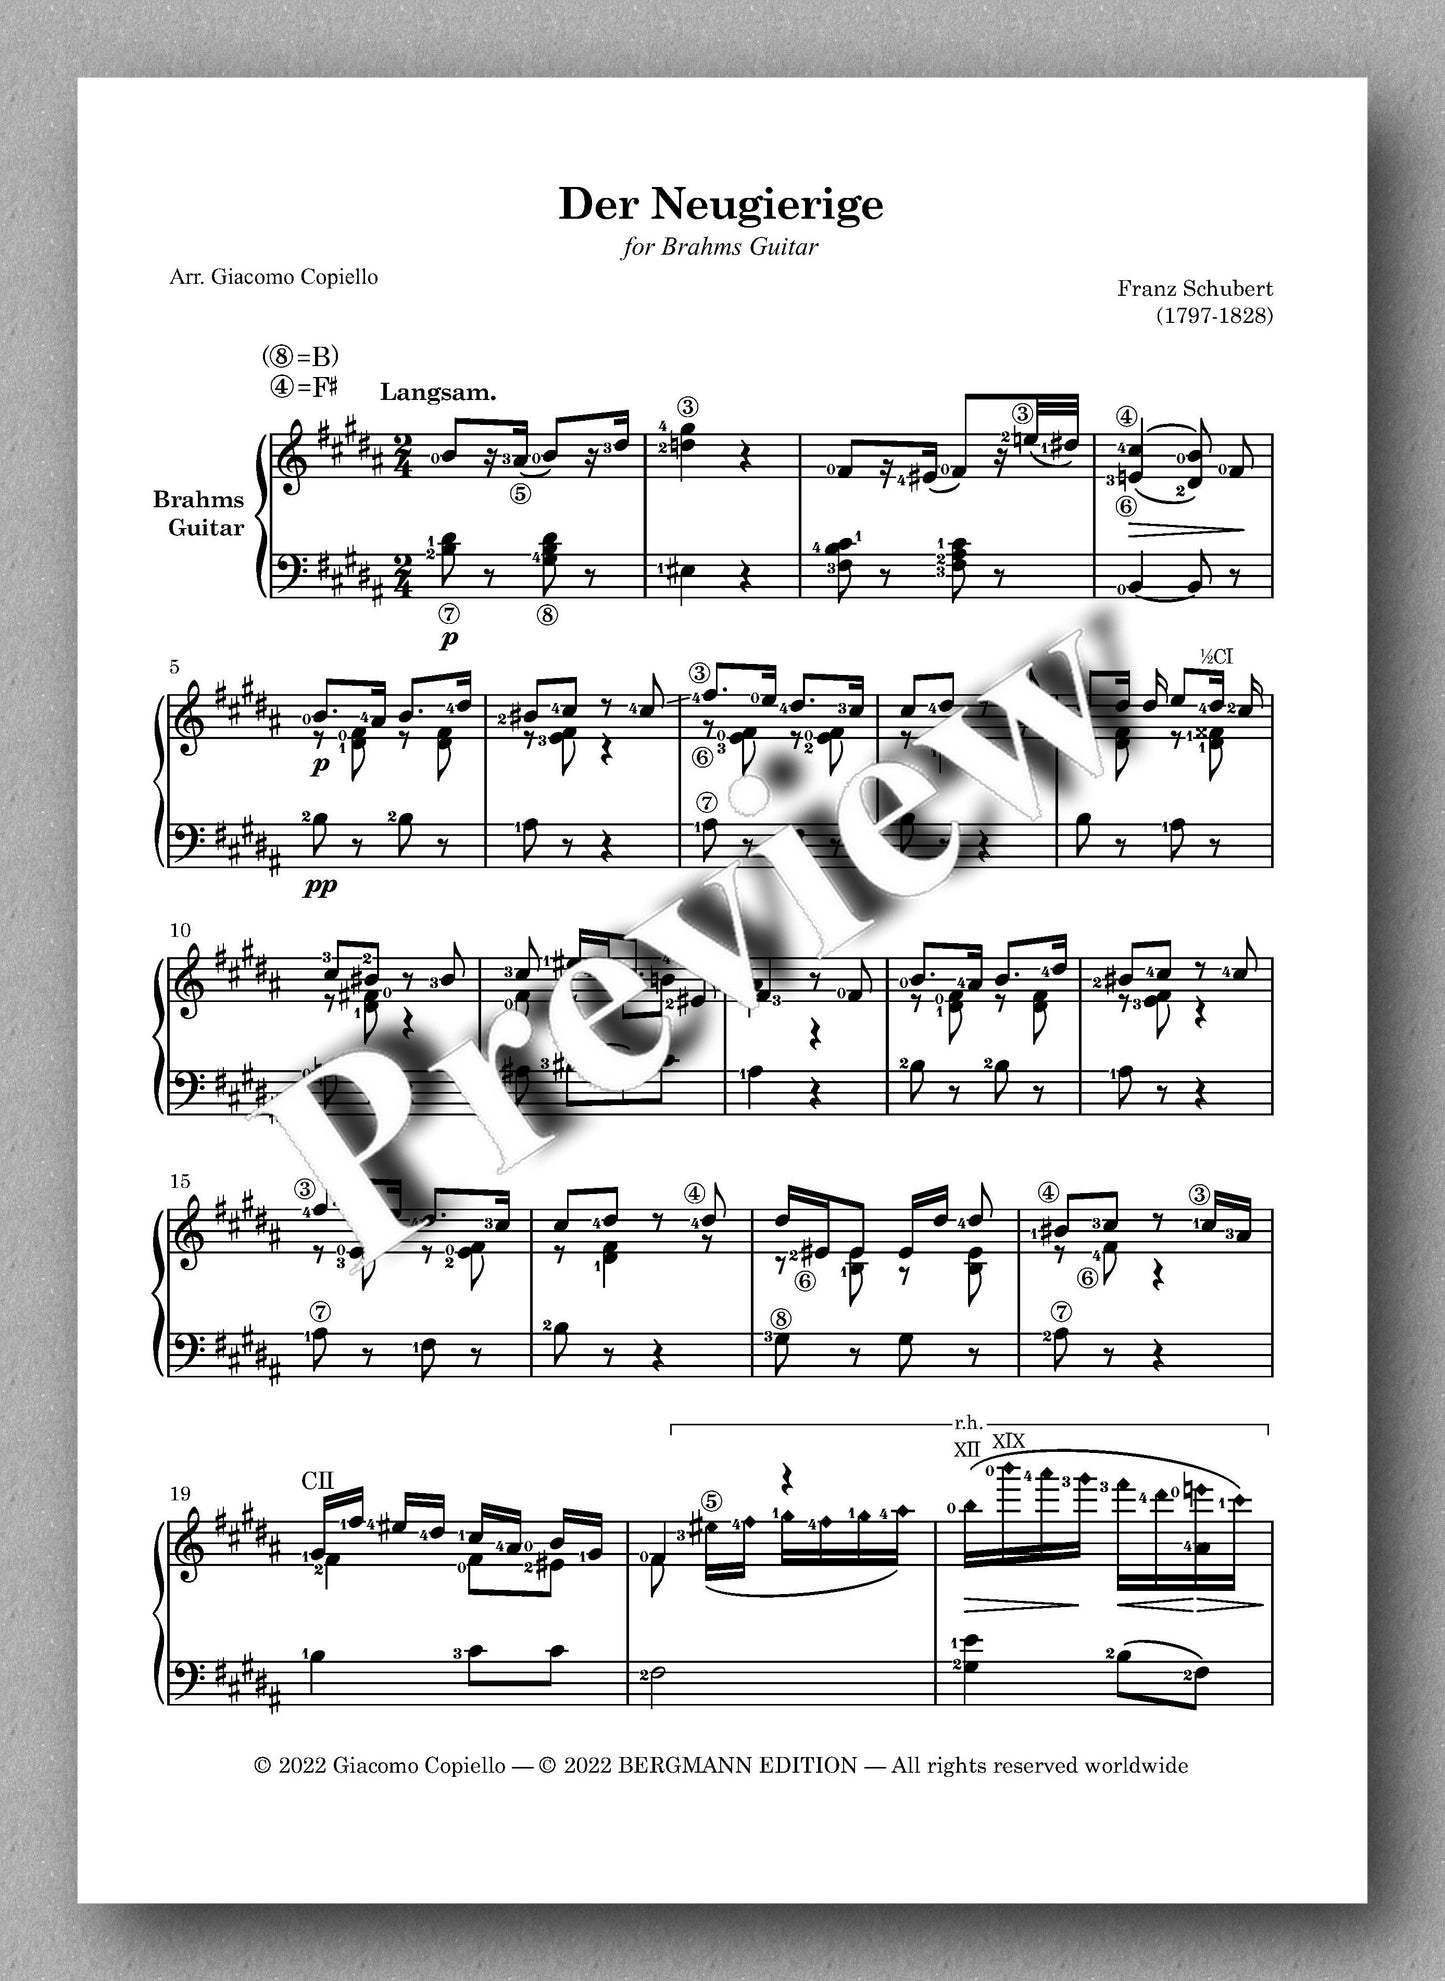 Lieder vol. 1, by Franz Schubert  - preview of the music score 3